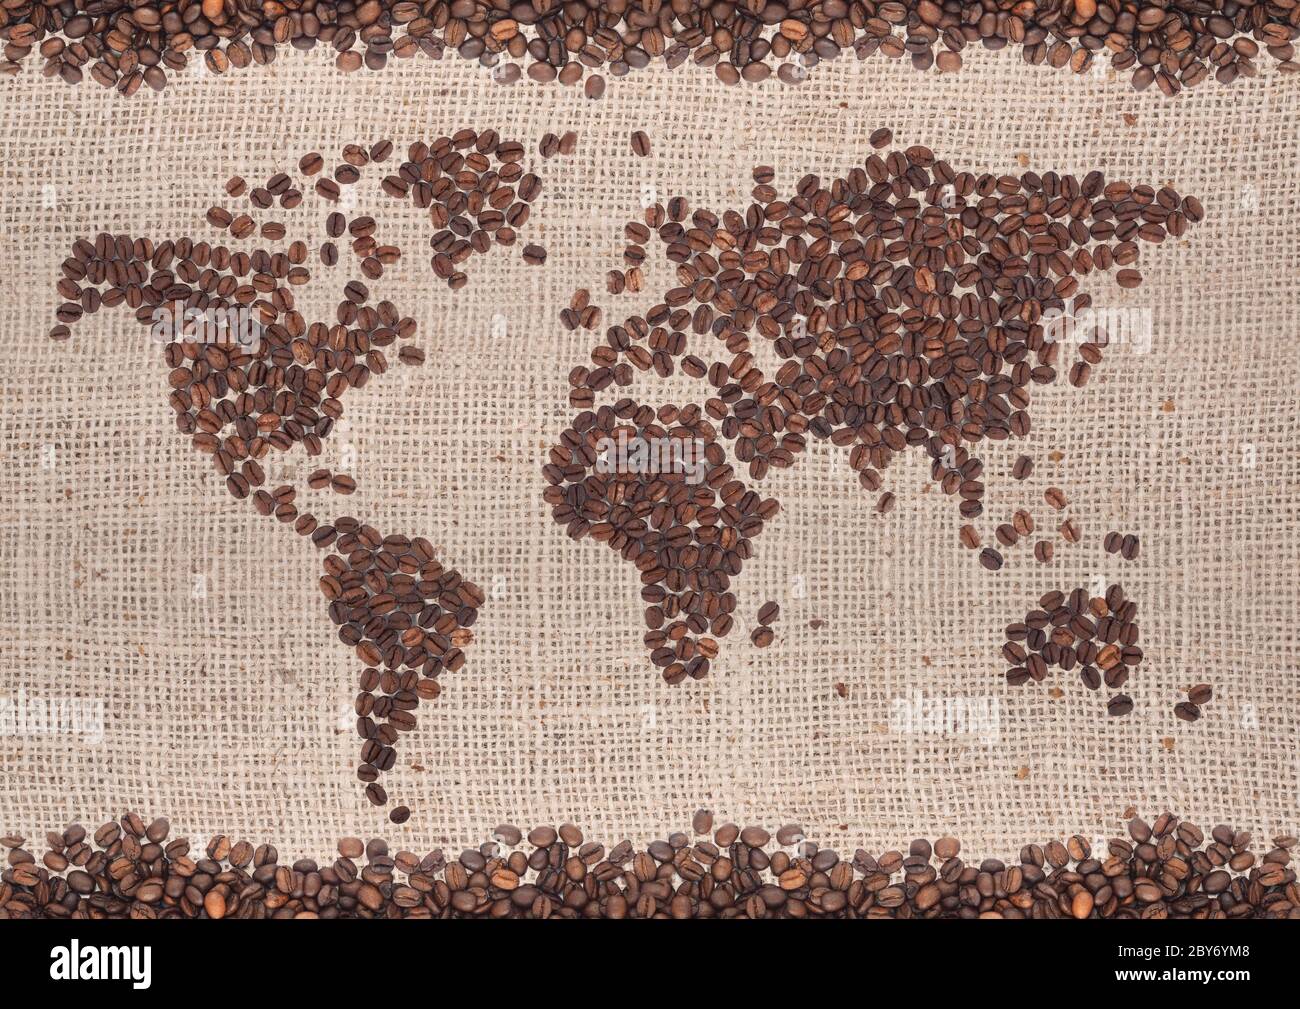 Coffee map Stock Photo